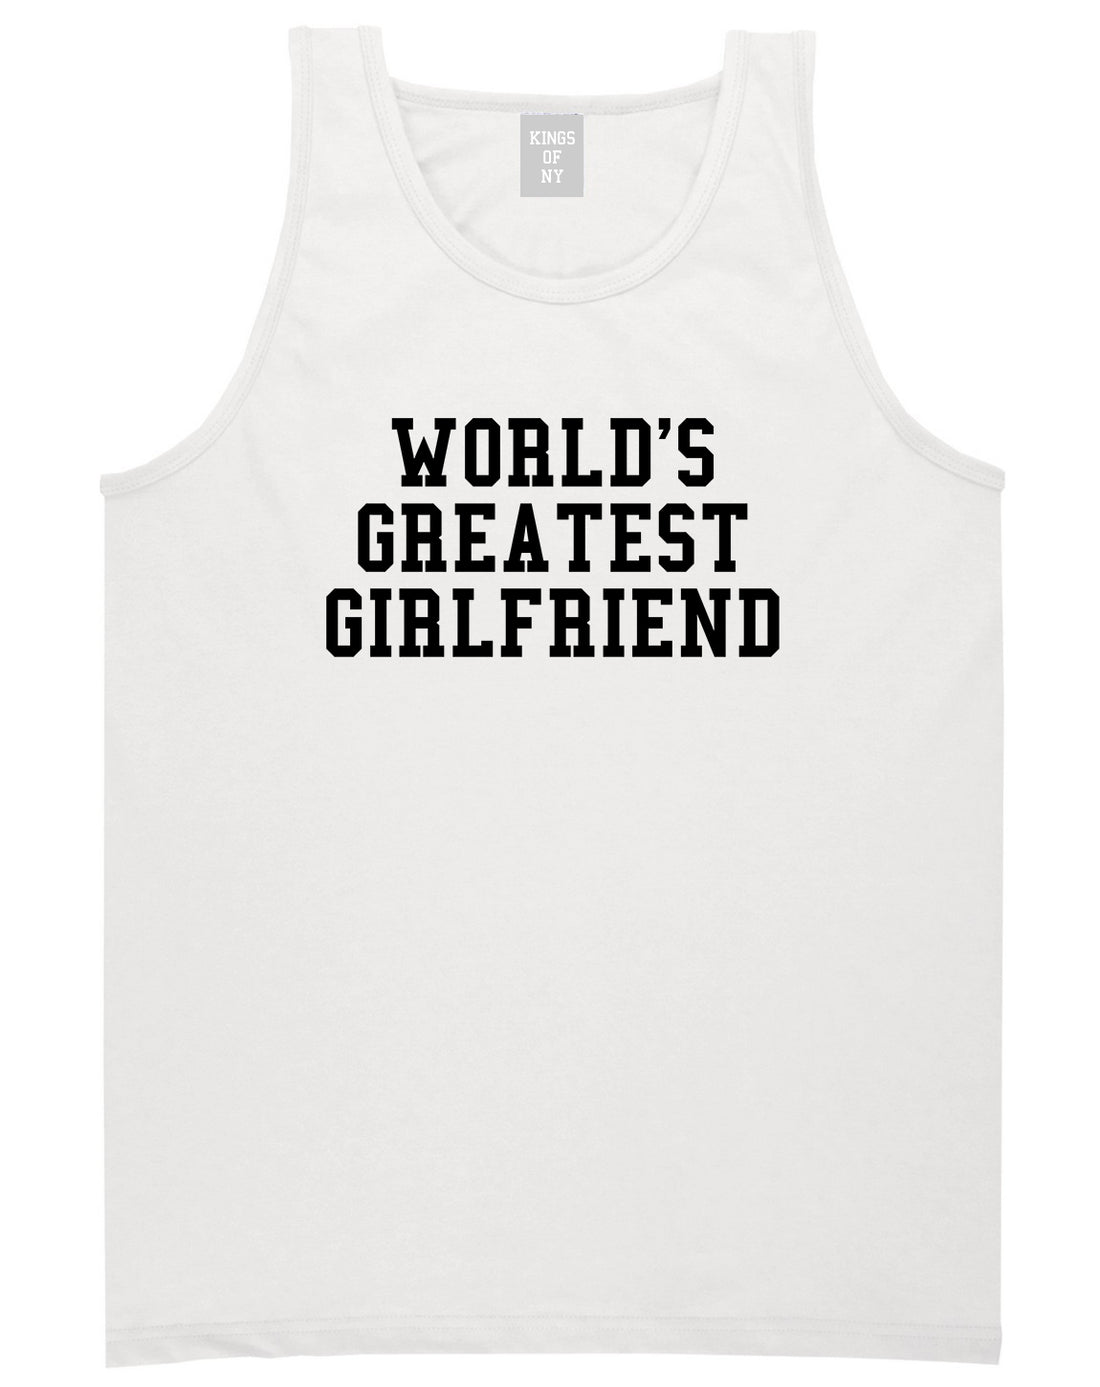 Worlds Greatest Girlfriend Funny Birthday Gift Mens Tank Top T-Shirt White